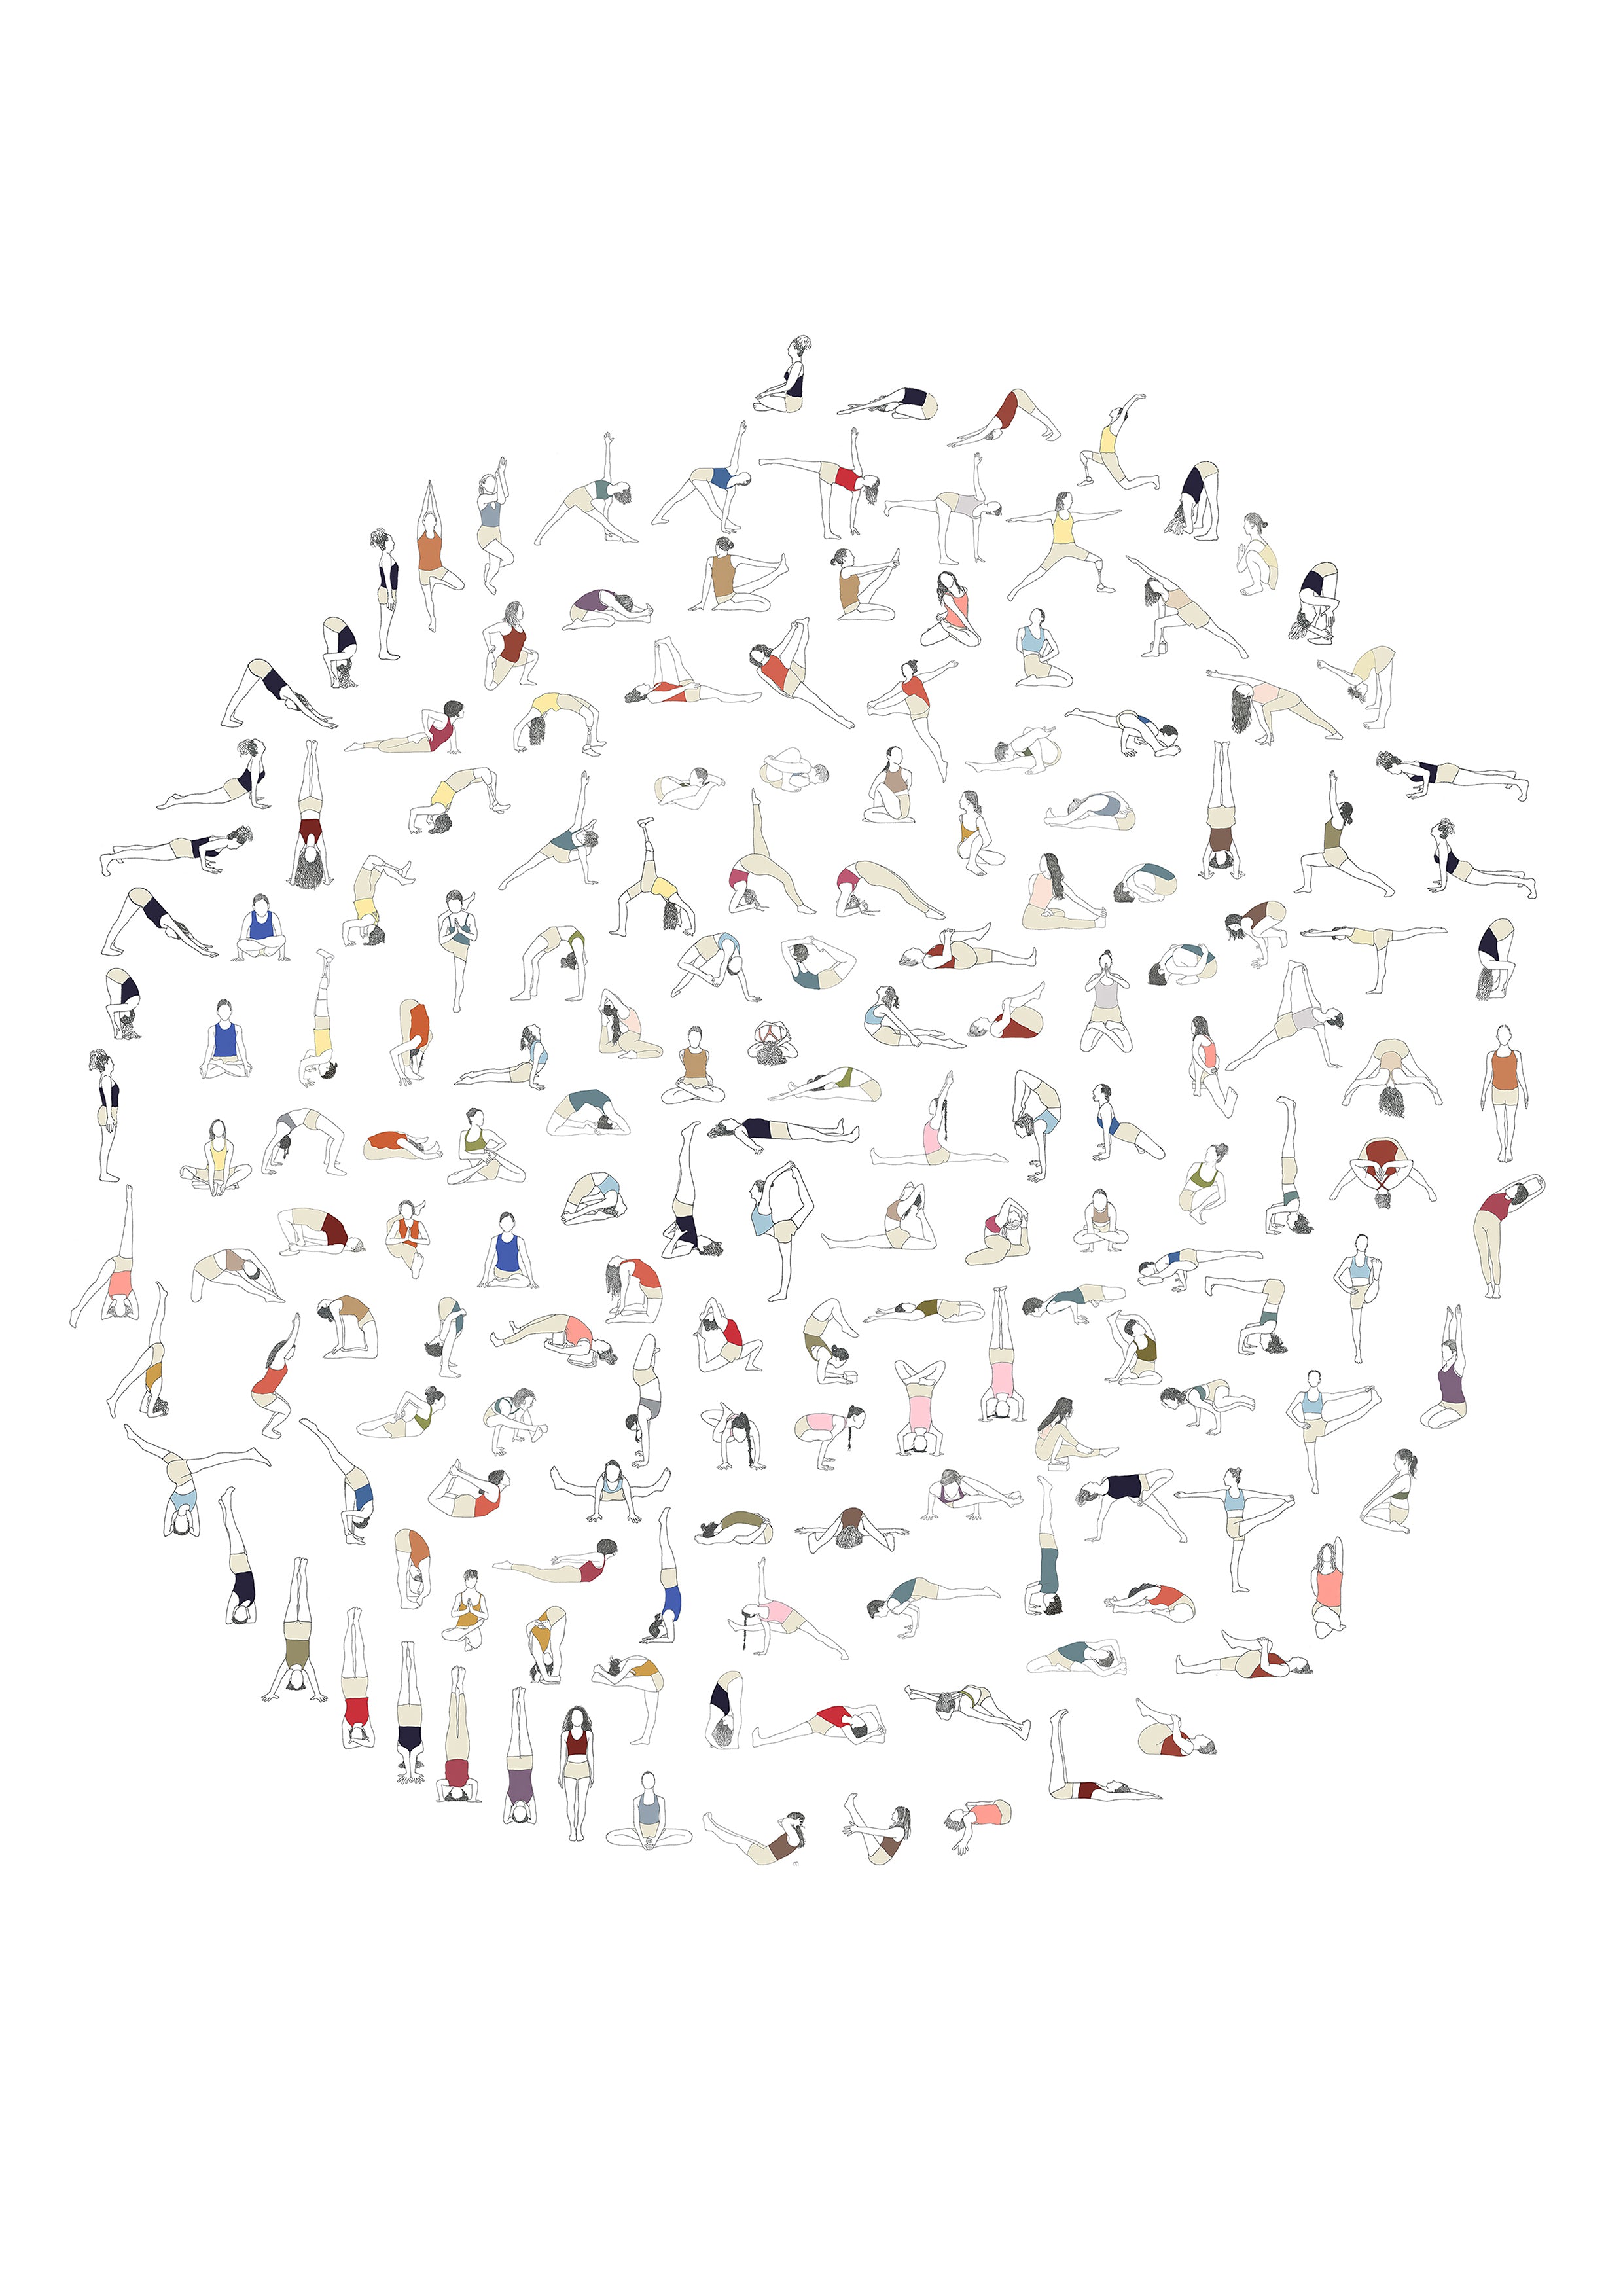 Sevjar Yoga Poster - Ashtanga Second Series – Svejar Yoga Illustrations